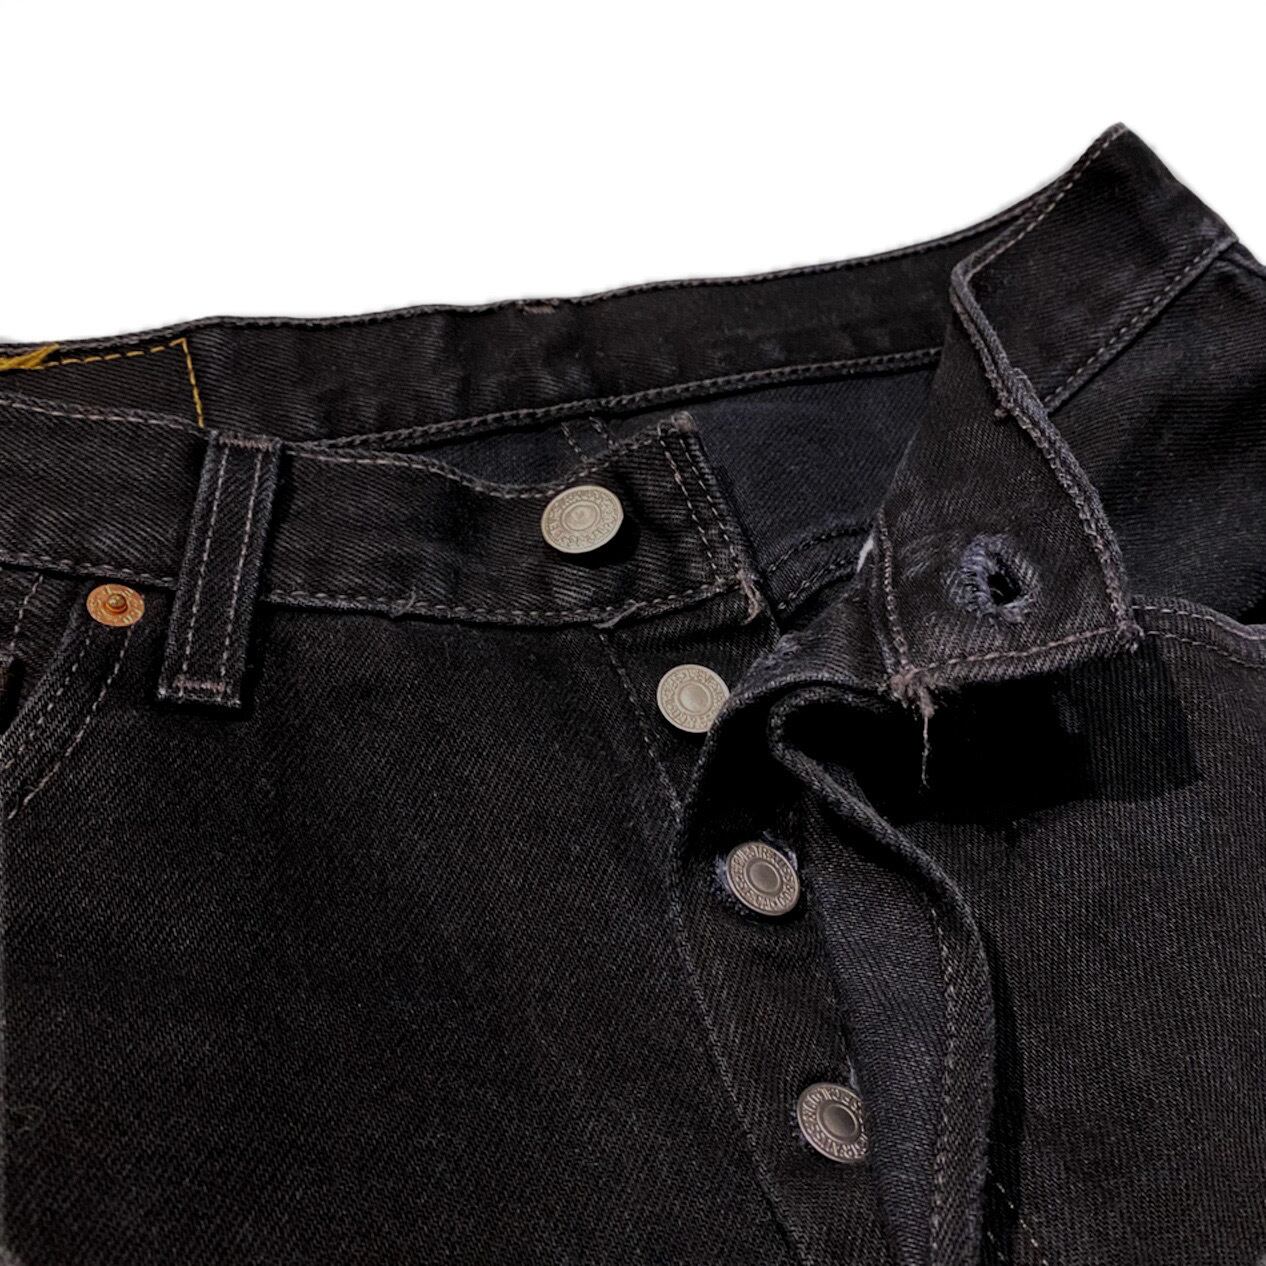 USA製 Levi's 501 Black Denim Pants 30×34 / リーバイス デニム